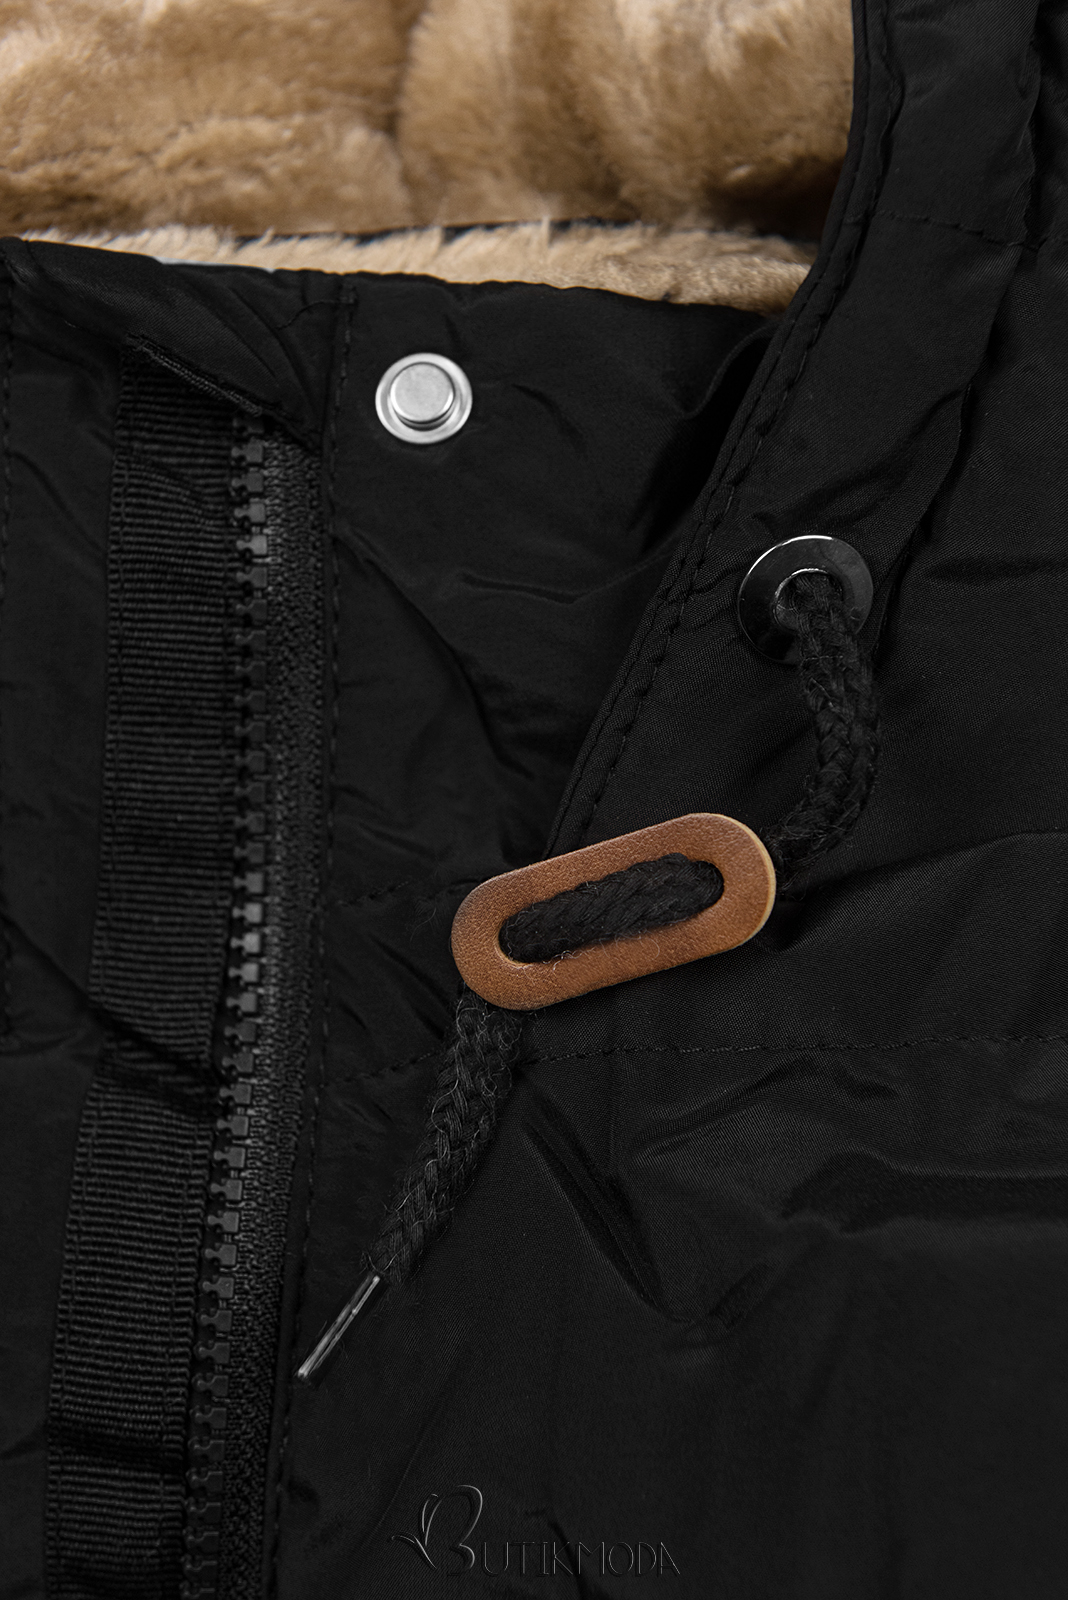 Black winter jacket with fleece lining